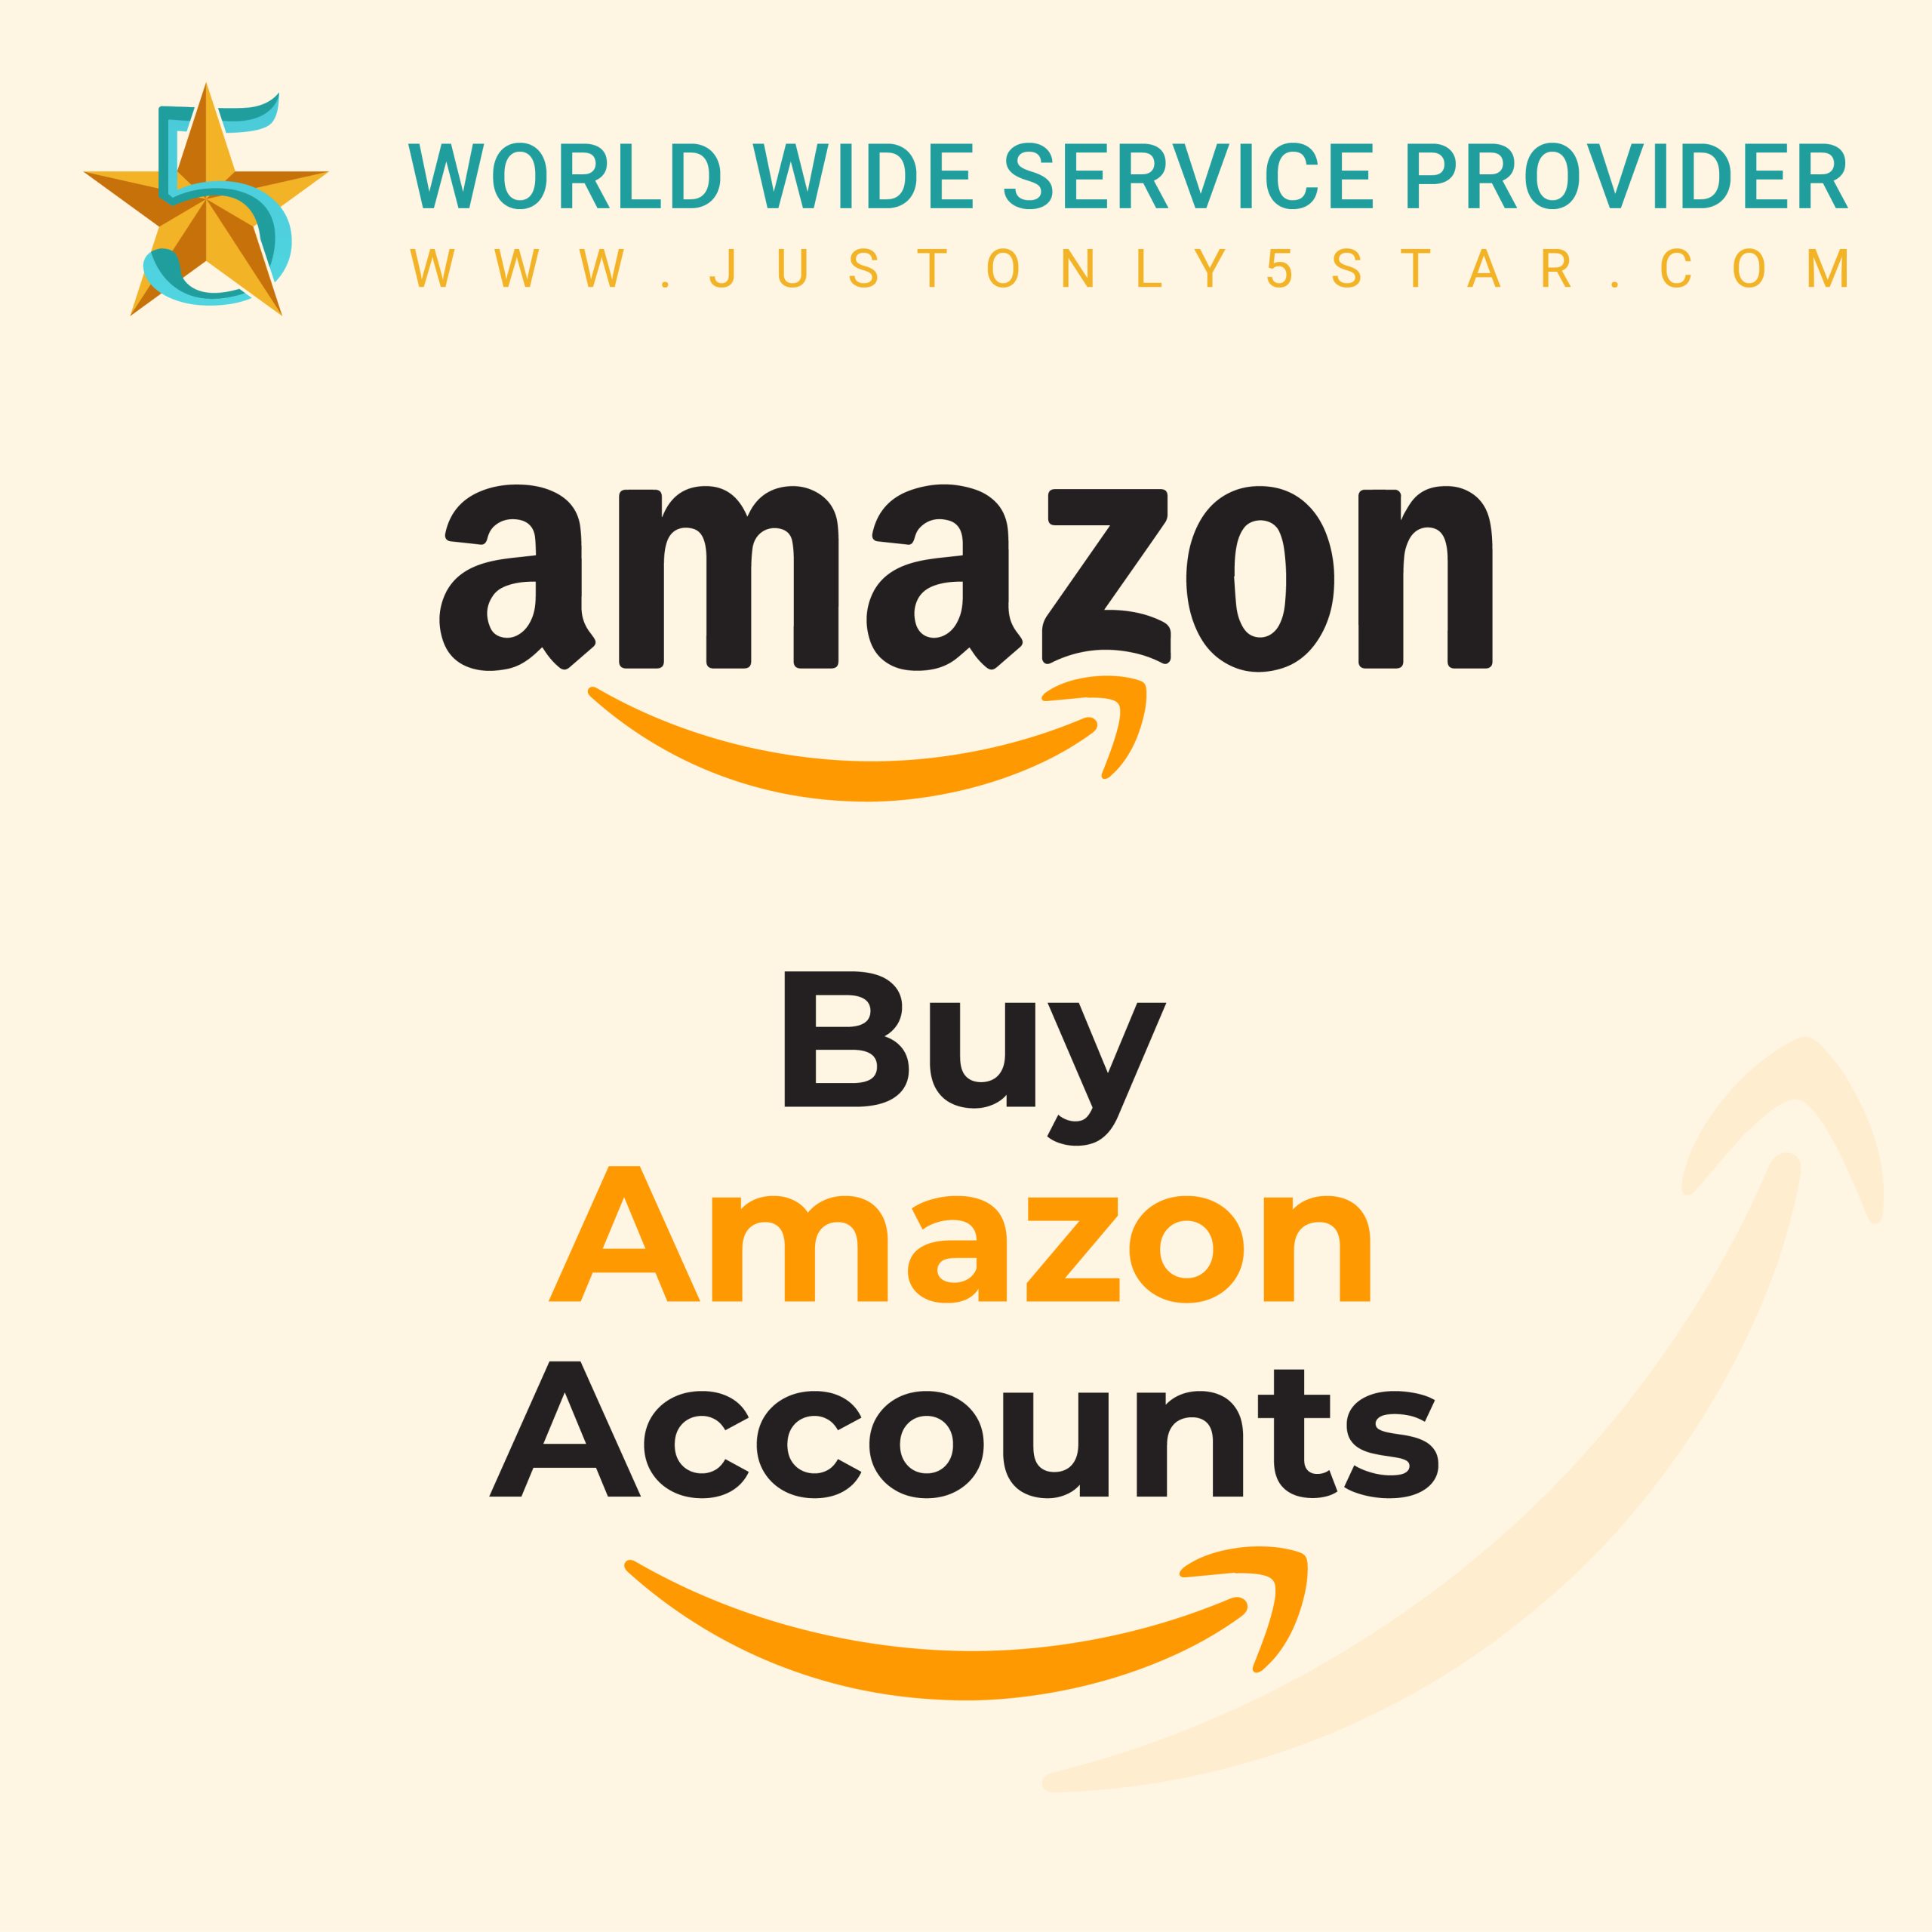 Amazon Accounts